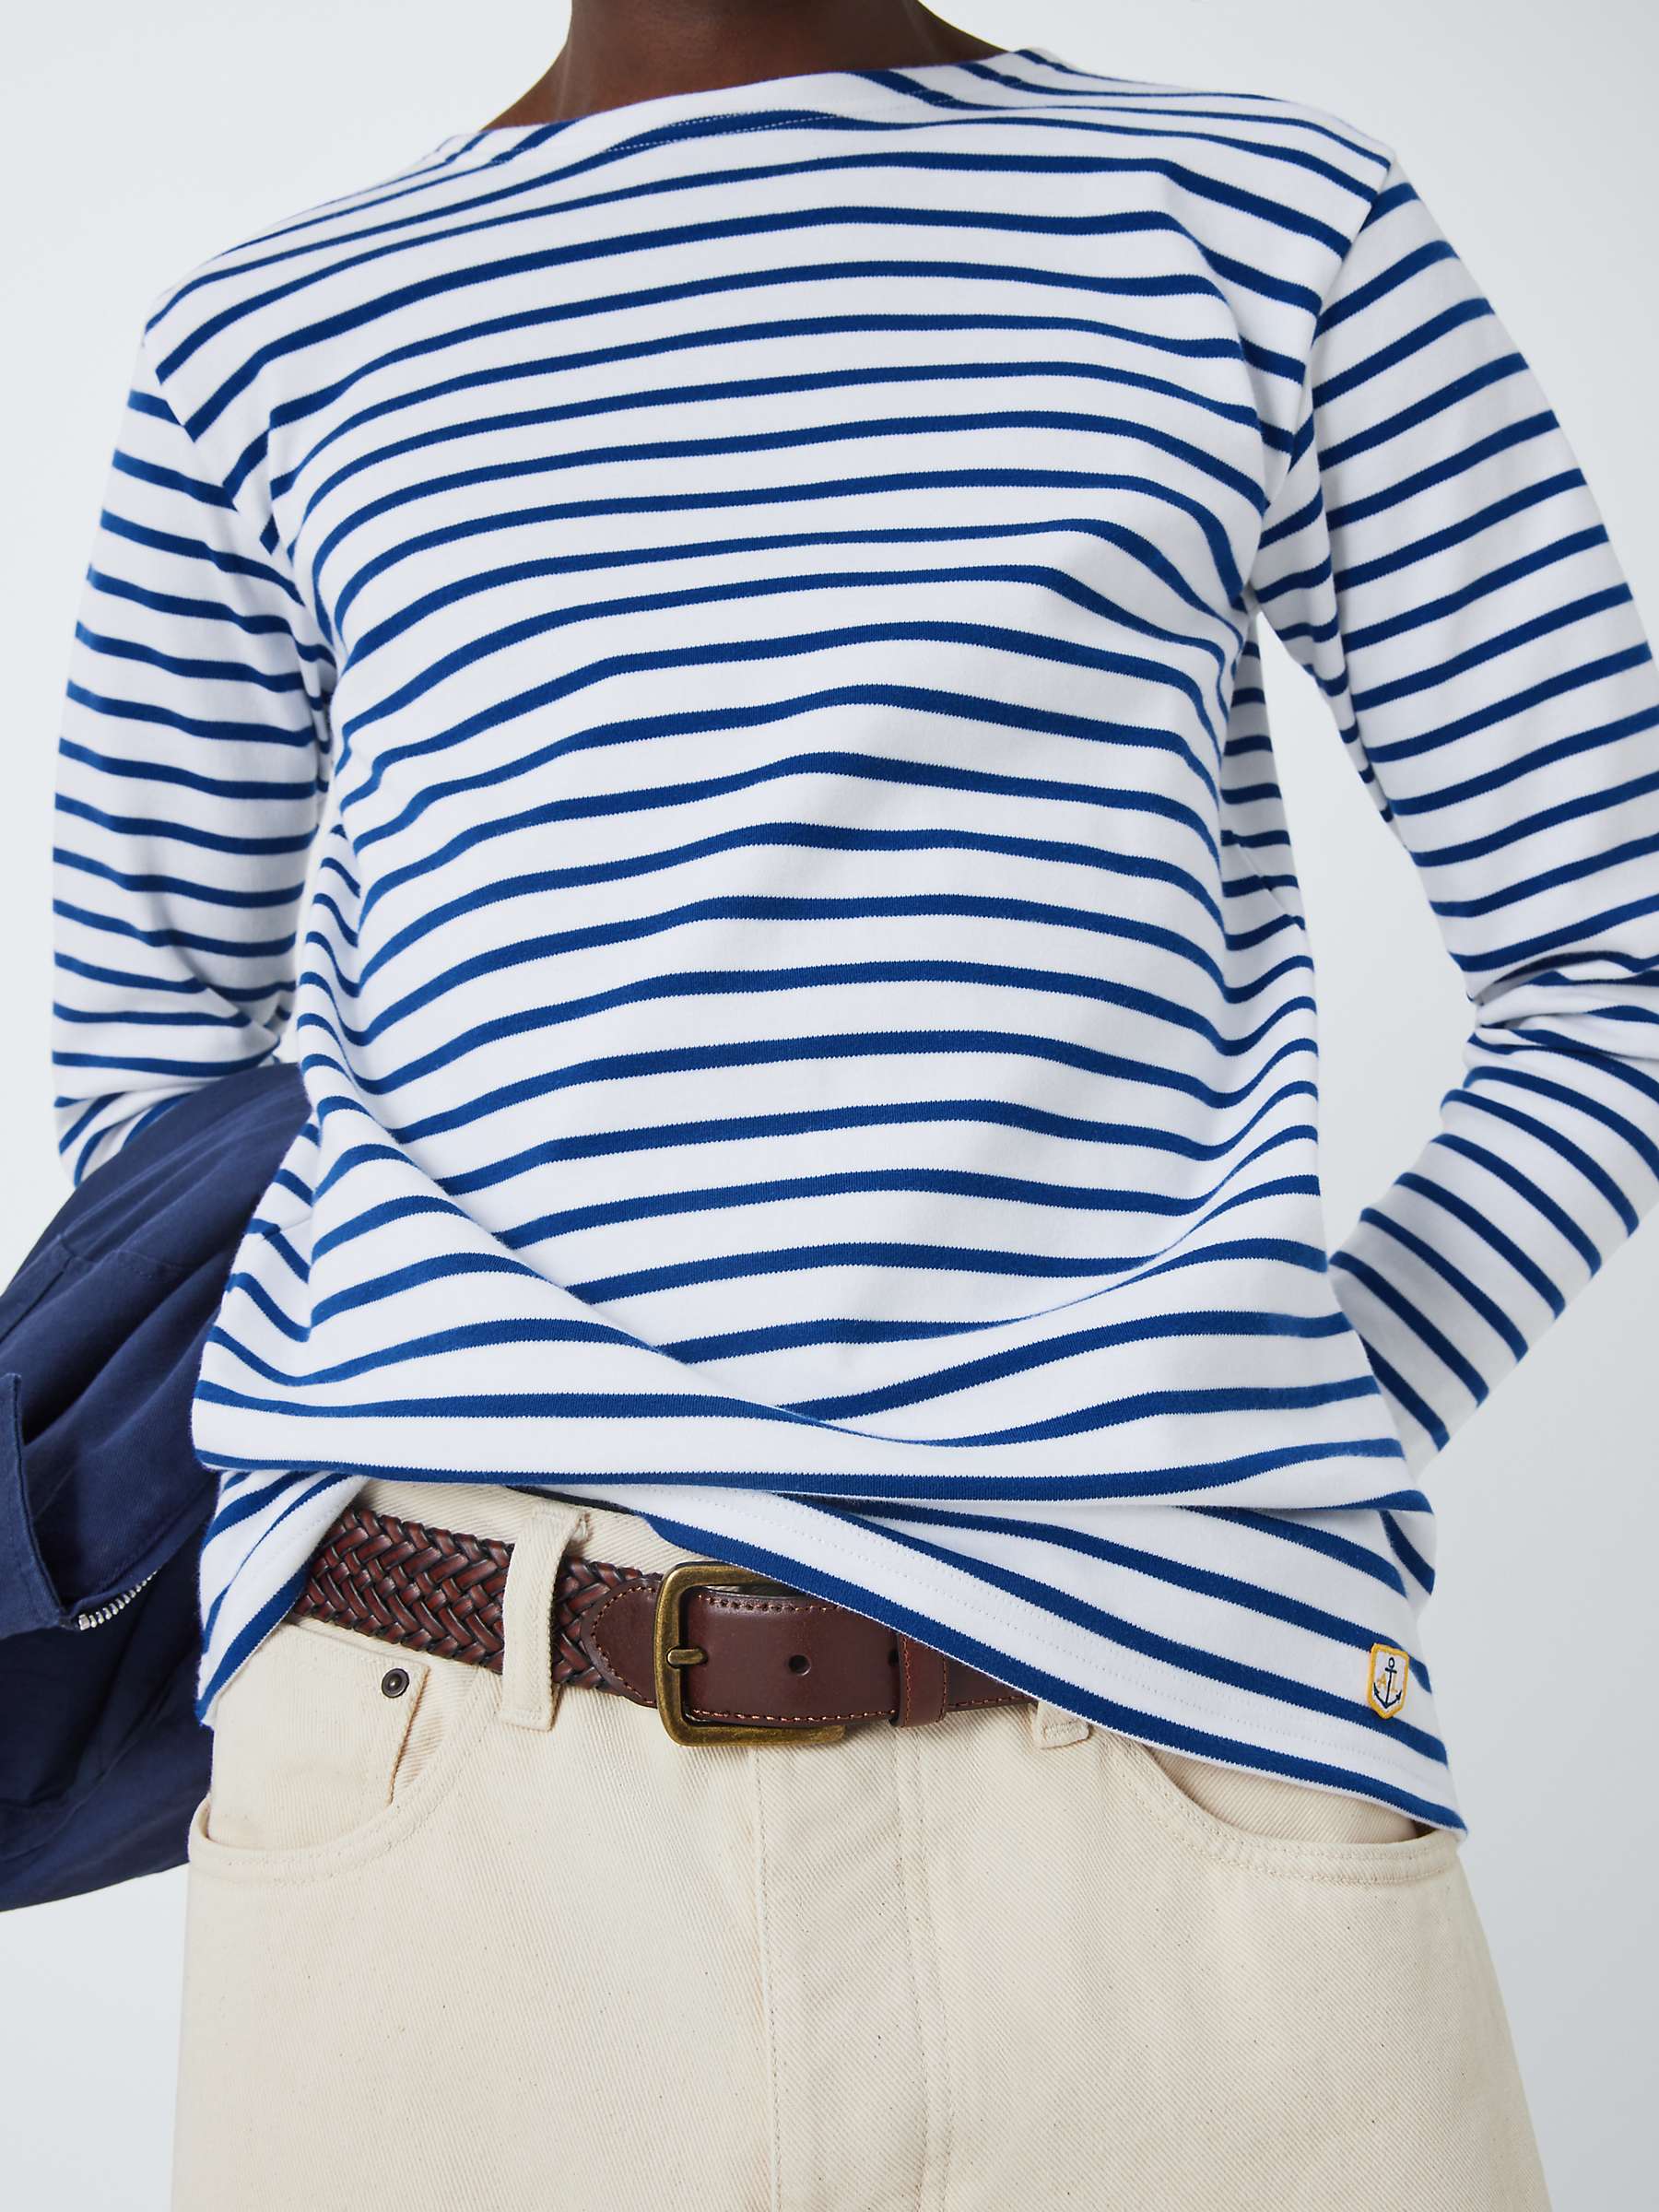 Buy Armor Lux Breton Long Sleeve Stripe Shirt, White/Blue Online at johnlewis.com